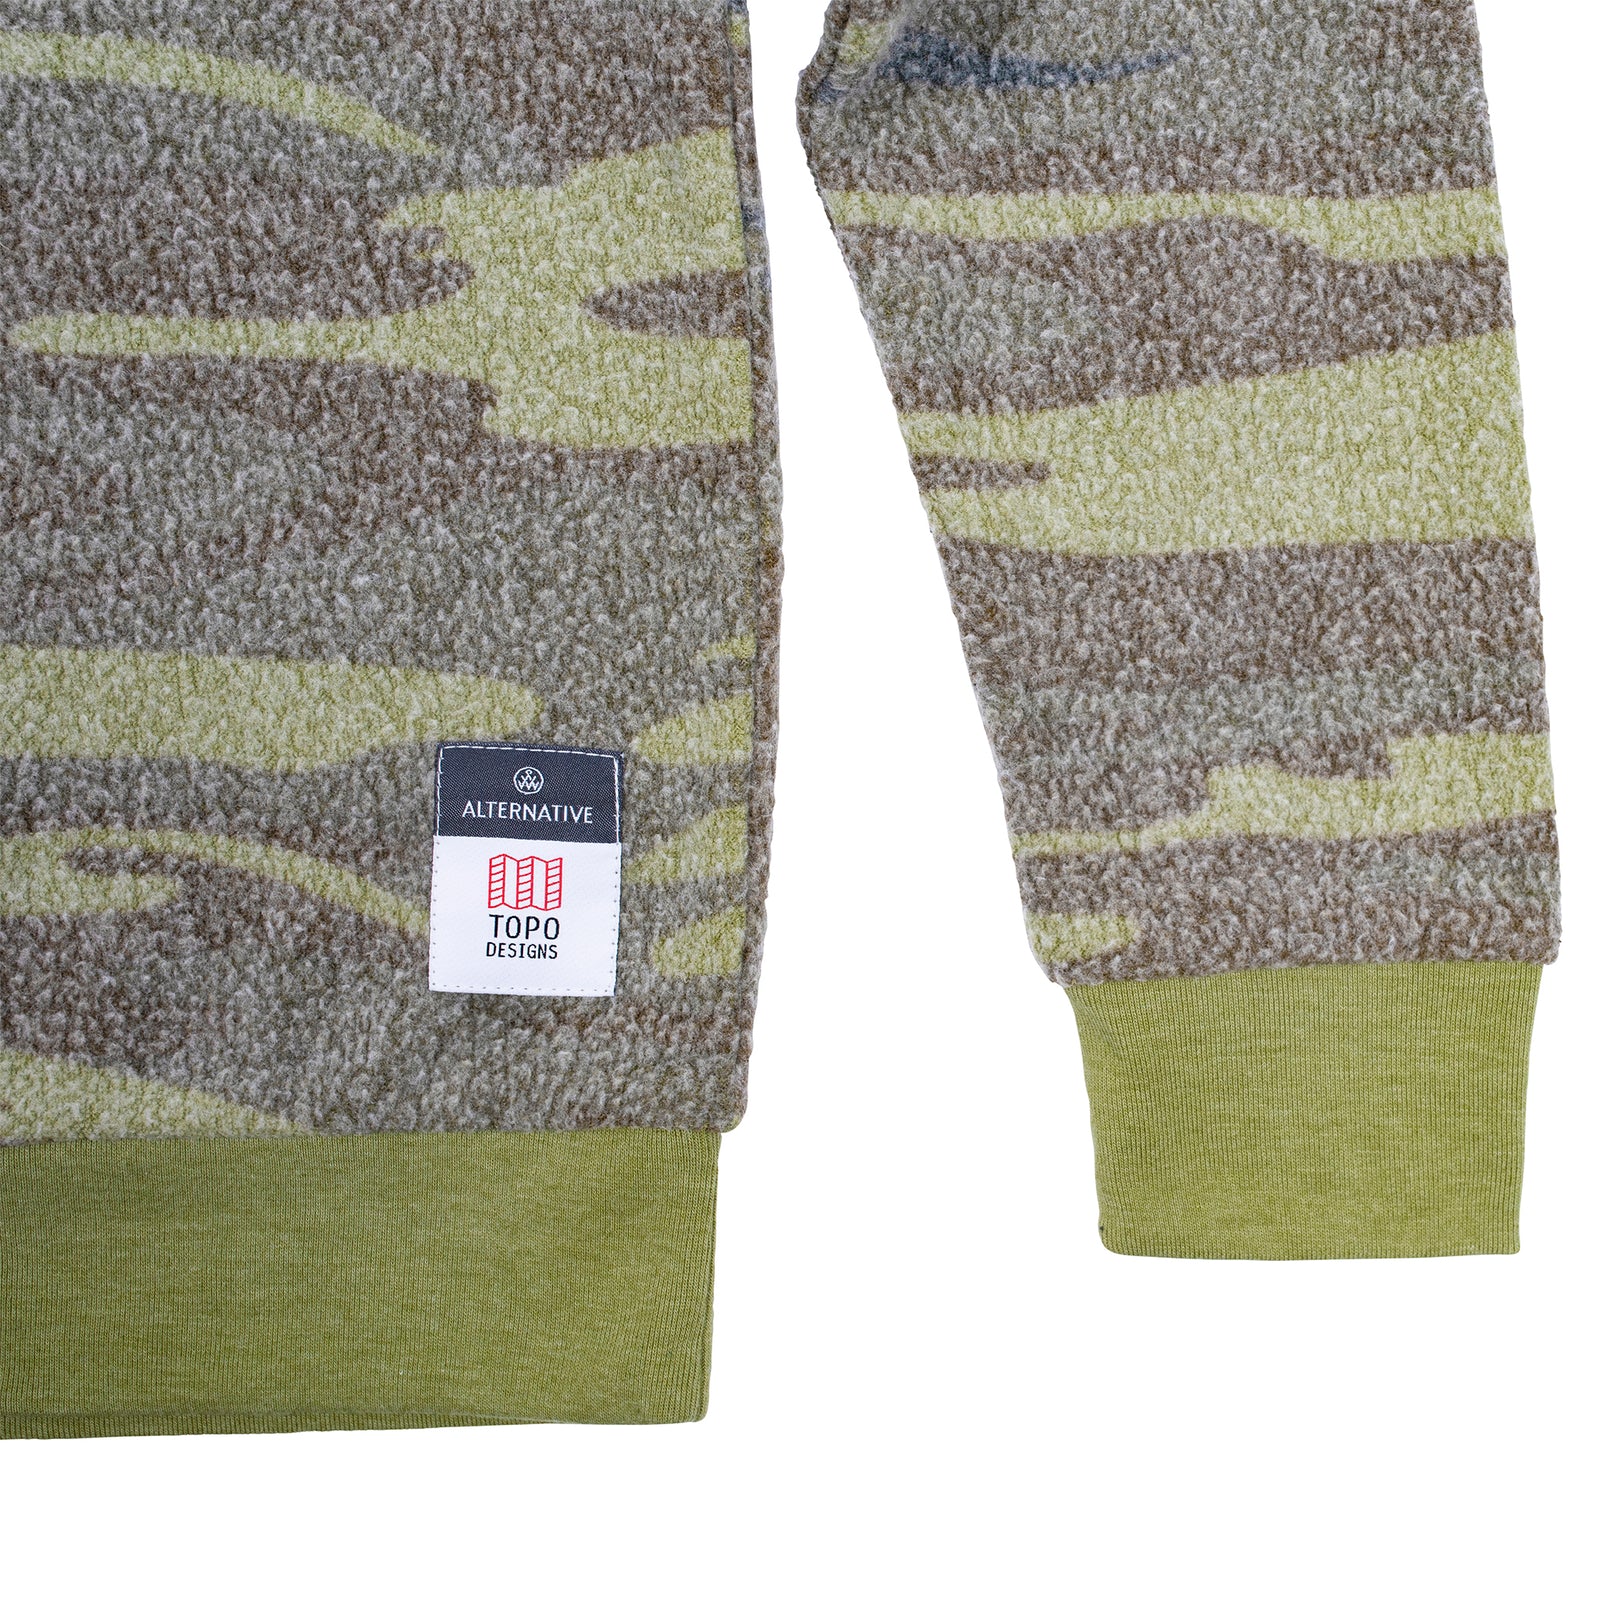 Detail shot of Topo Designs x Alternative Champ Eco-Teddy Sweatshirt - Men's in camo showing tag near bottom hem.